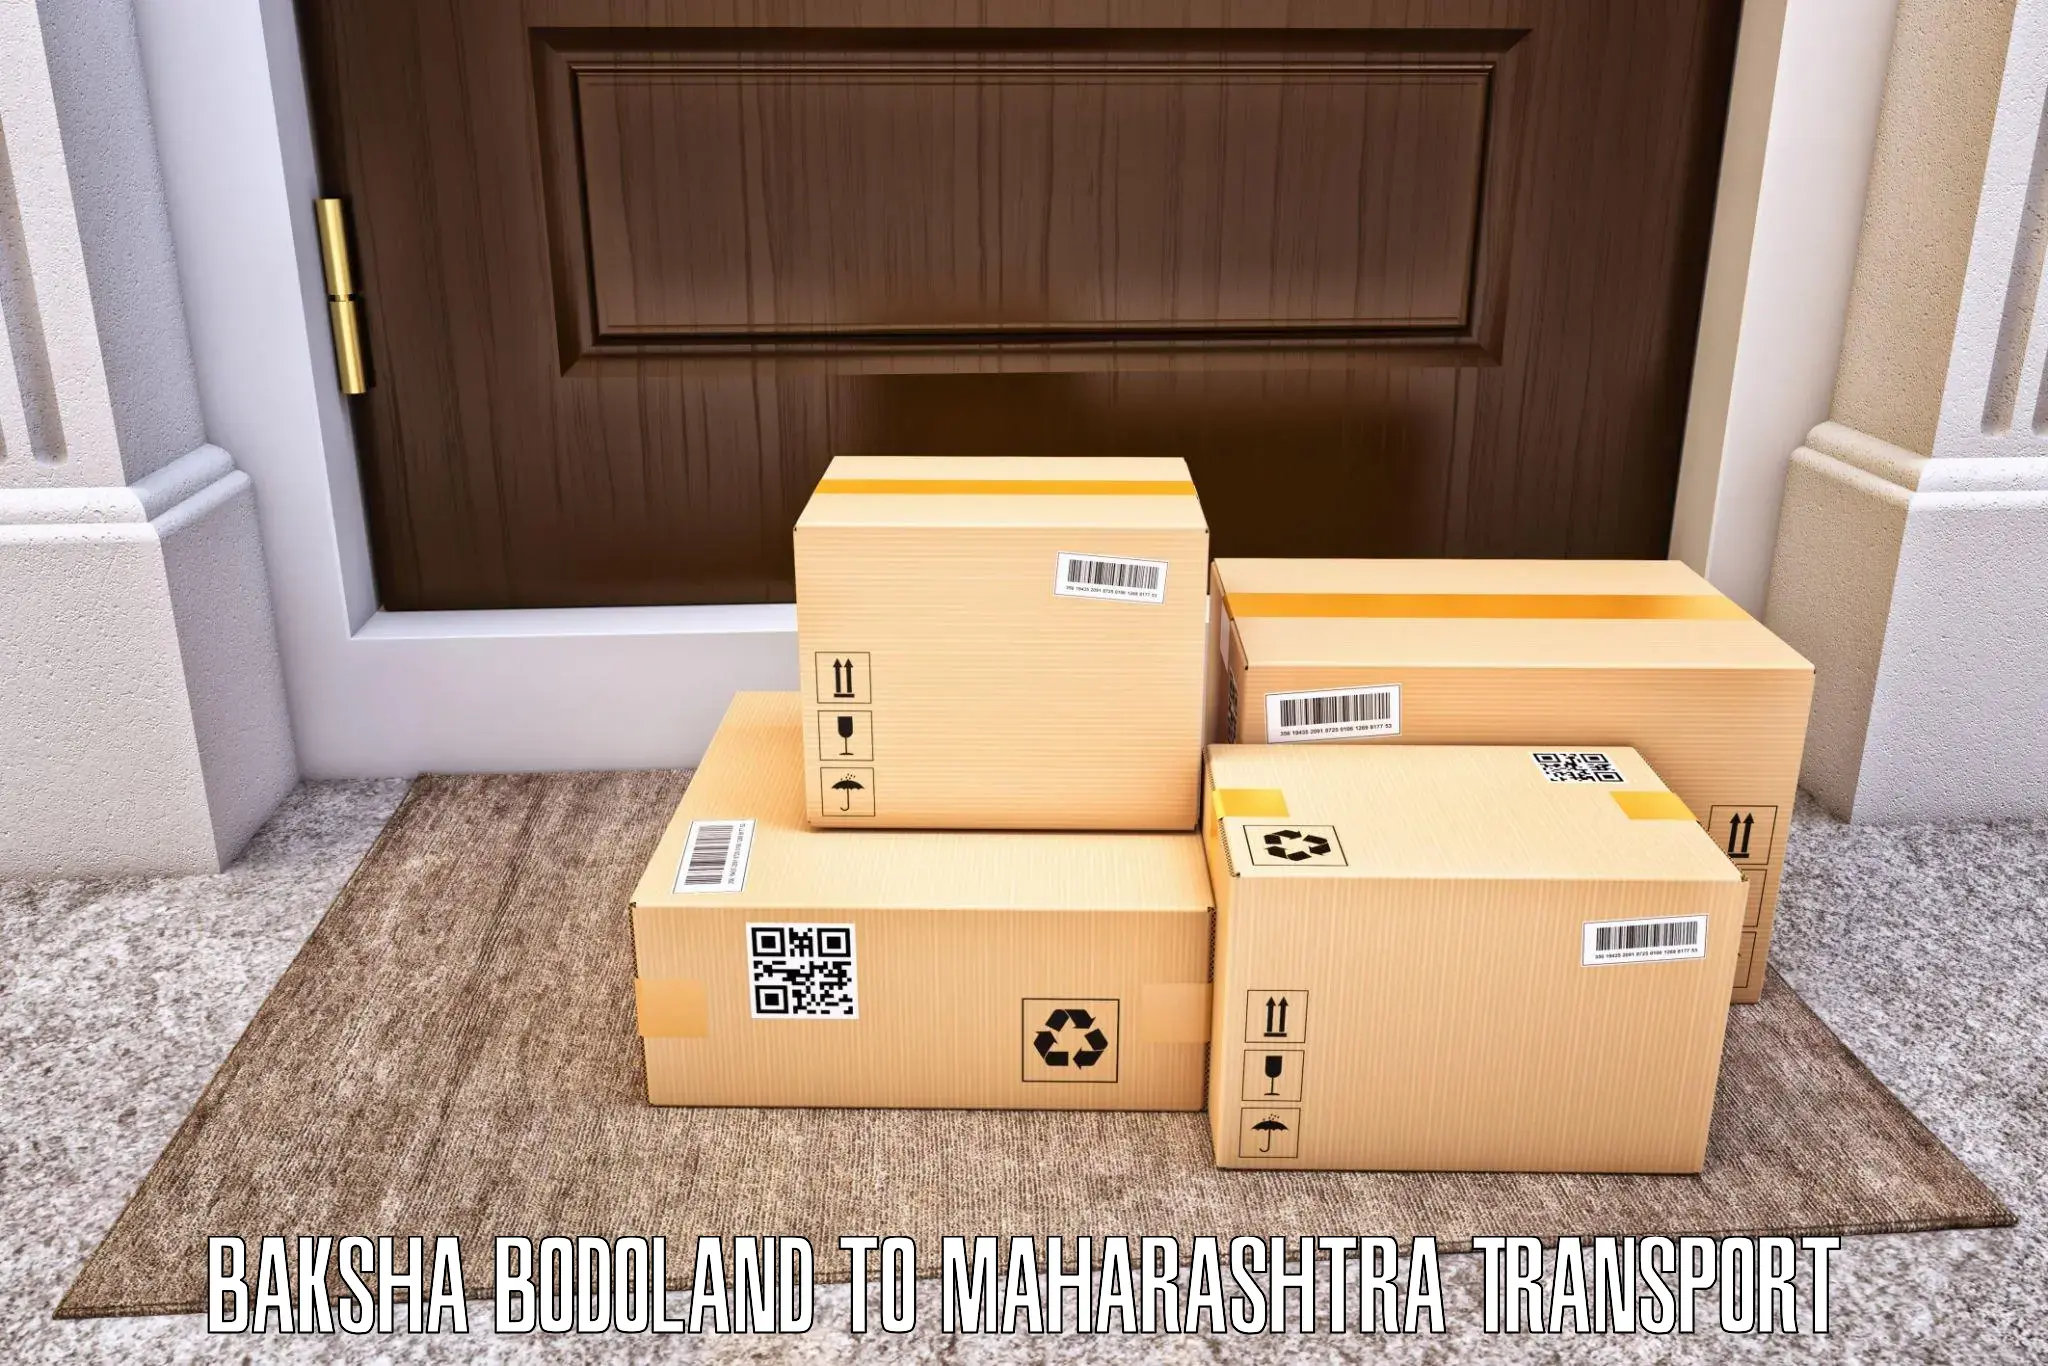 Interstate goods transport in Baksha Bodoland to Maharashtra